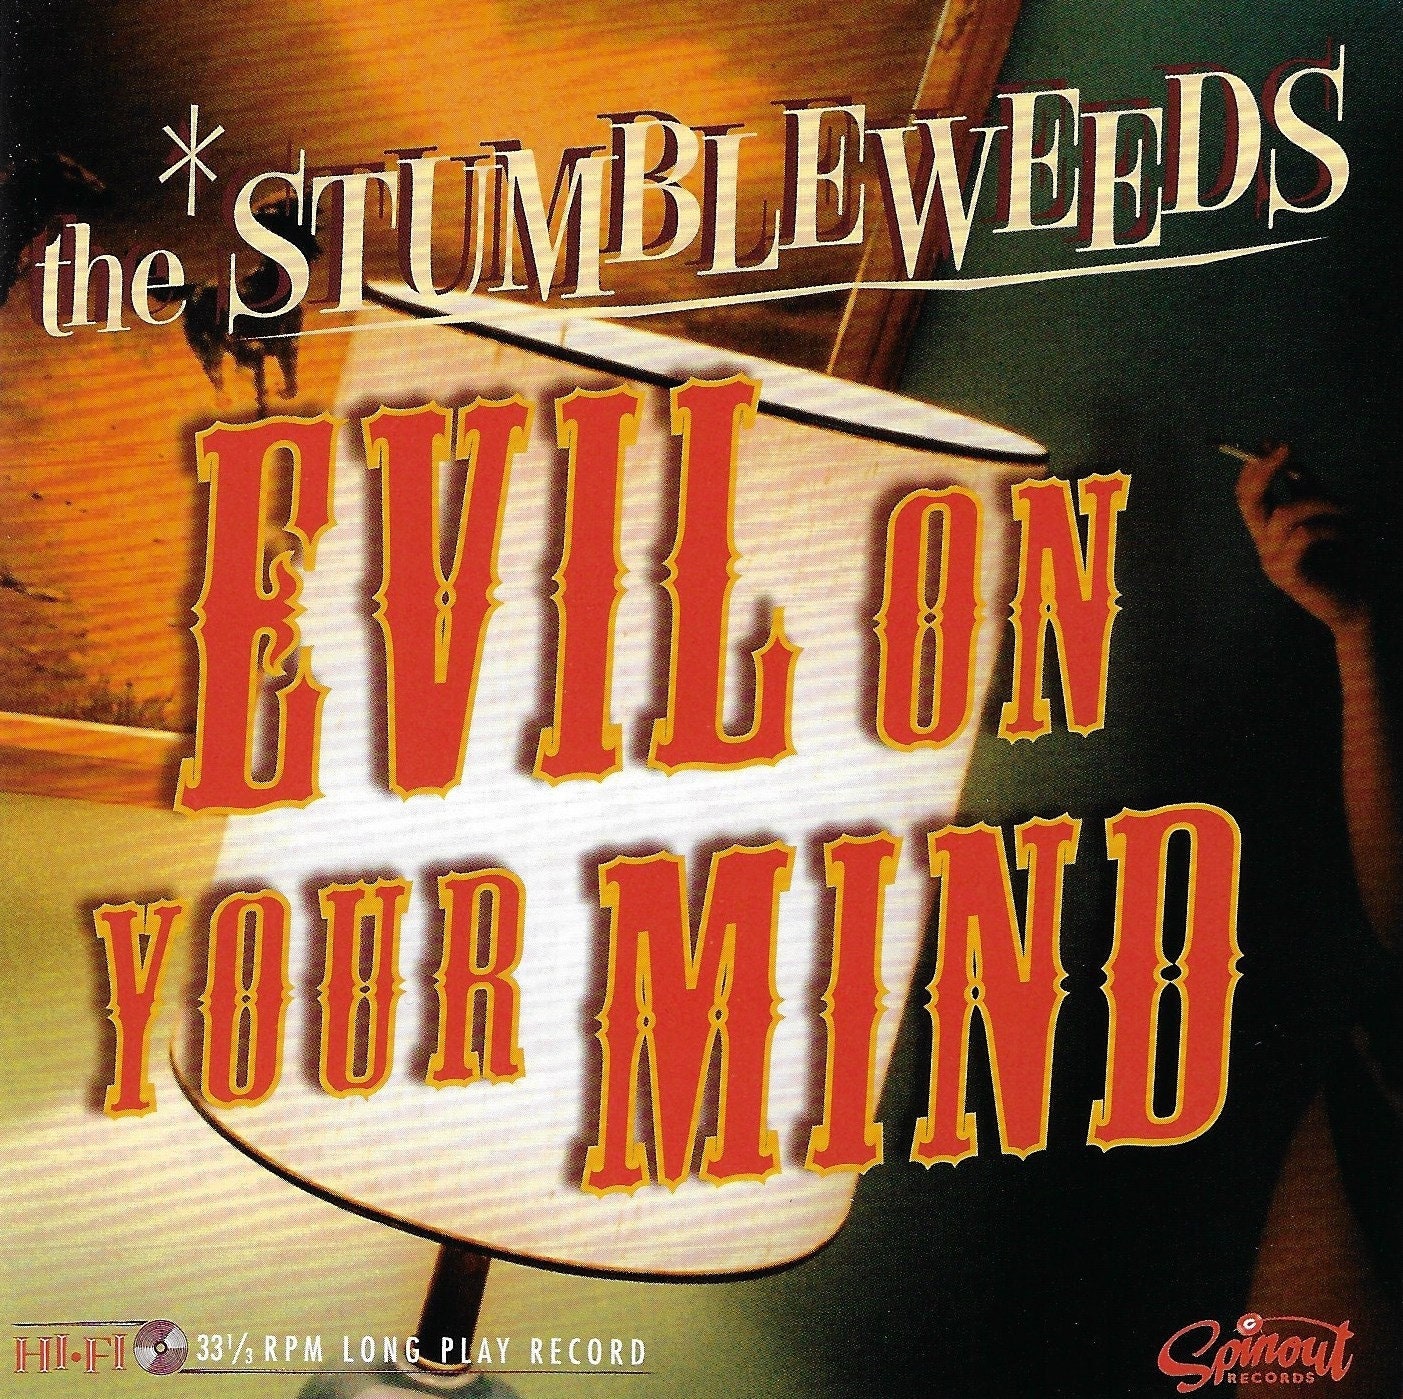 The Stumbleweeds "Evil On Your Mind" CD